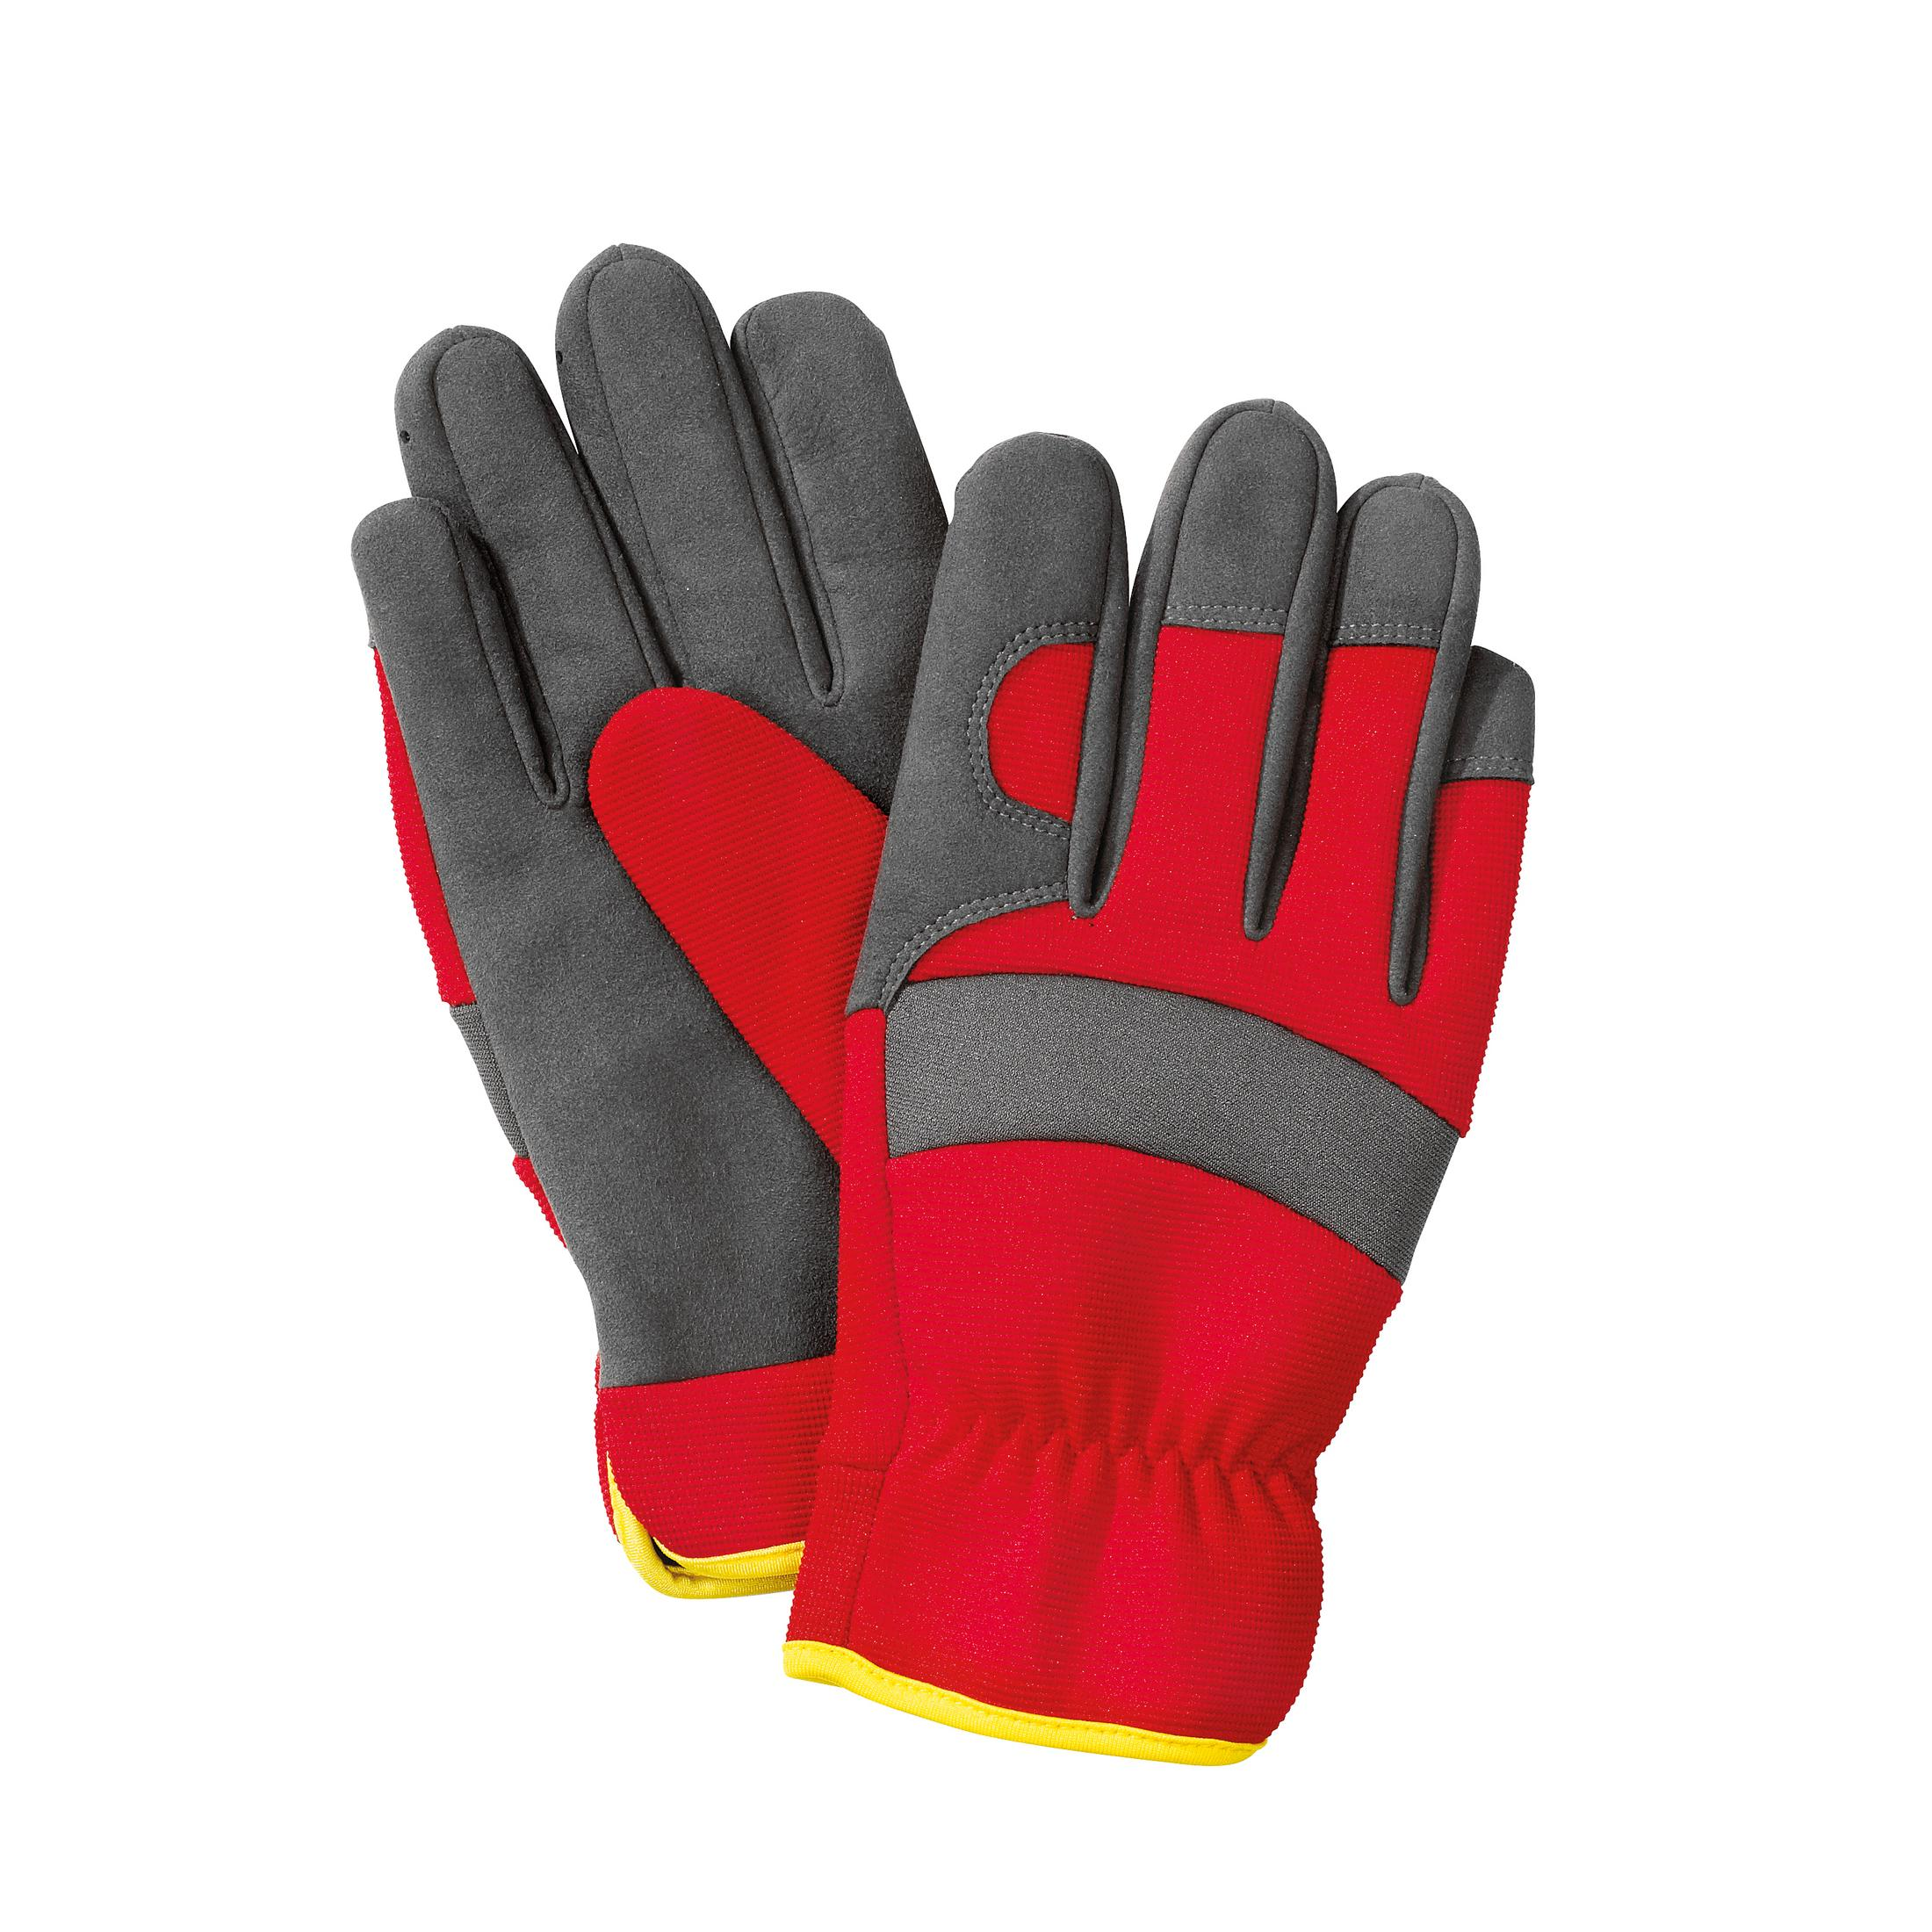 UNIVERSAL-HANDSCHUH 10 GH-U Rot/Grau/Gelb Universal-Handschuhe, WOLF 7760007